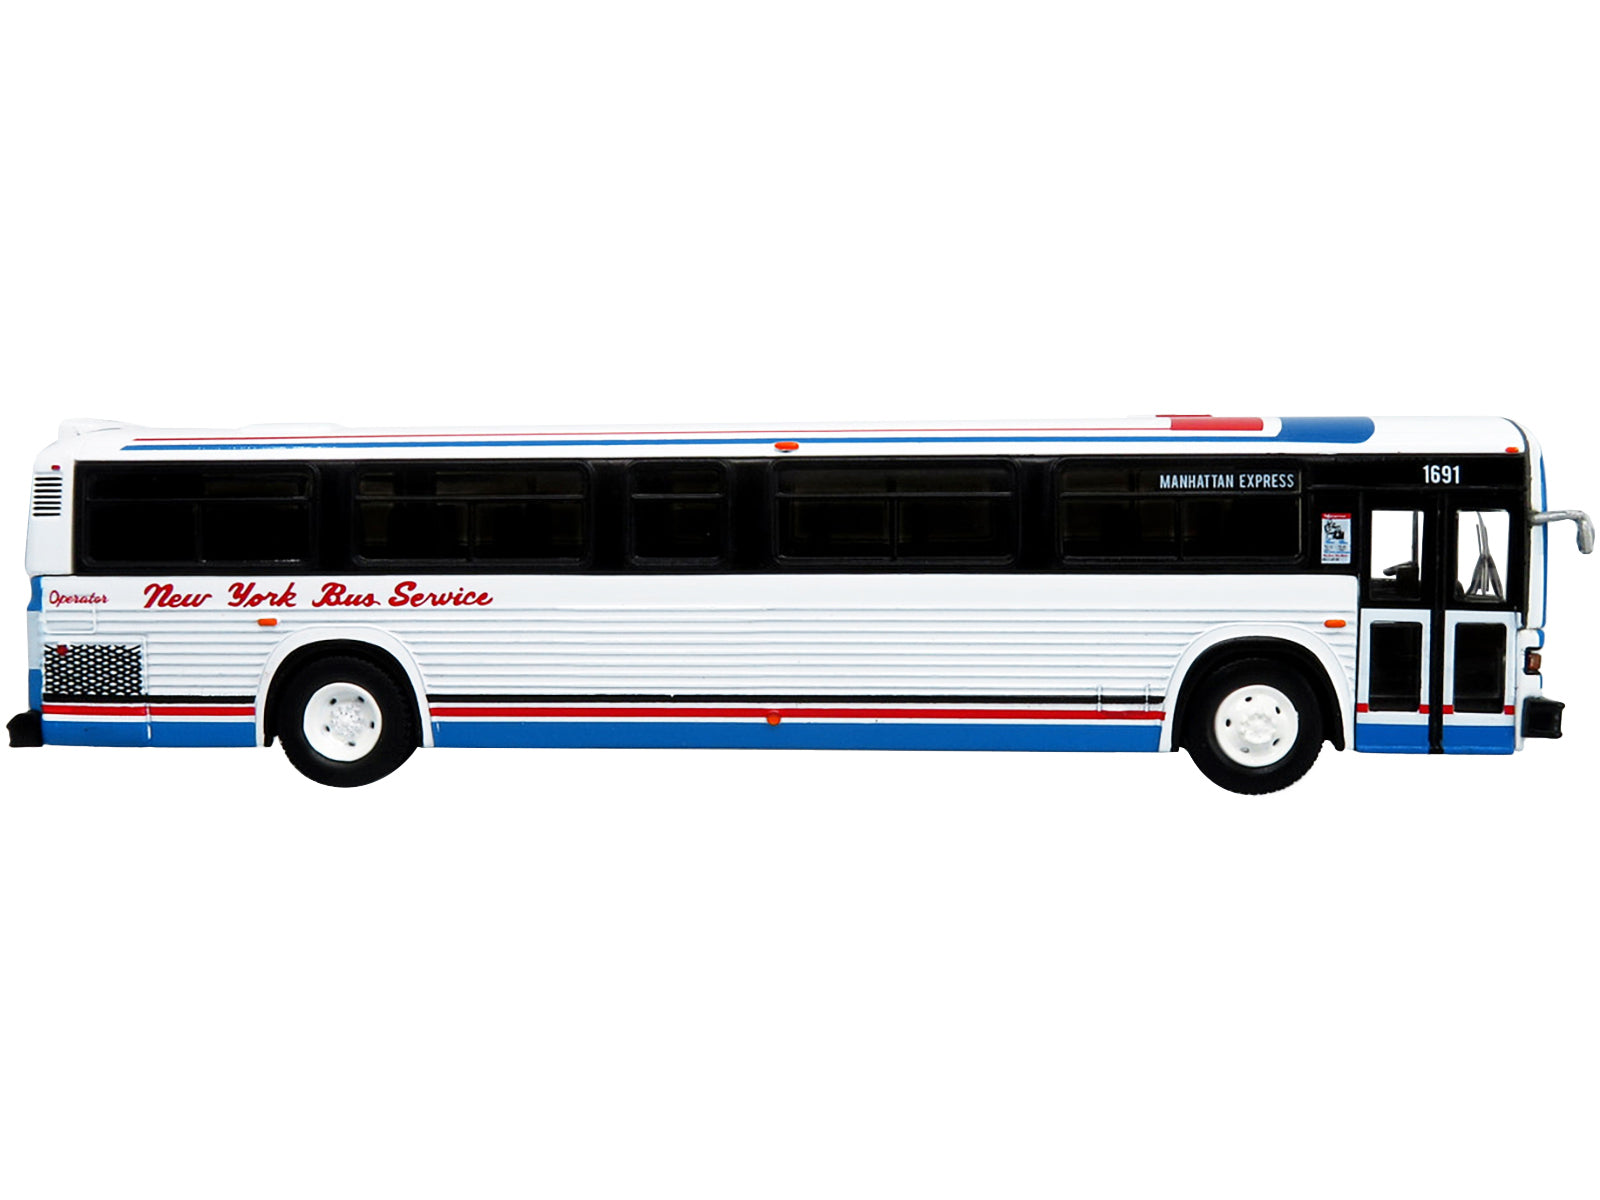 1989 MCI Classic Transit Bus New York Bus Service "Manhattan Express" "MTA New York City Bus" Series 1/87 Diecast Model by Iconic Replicas